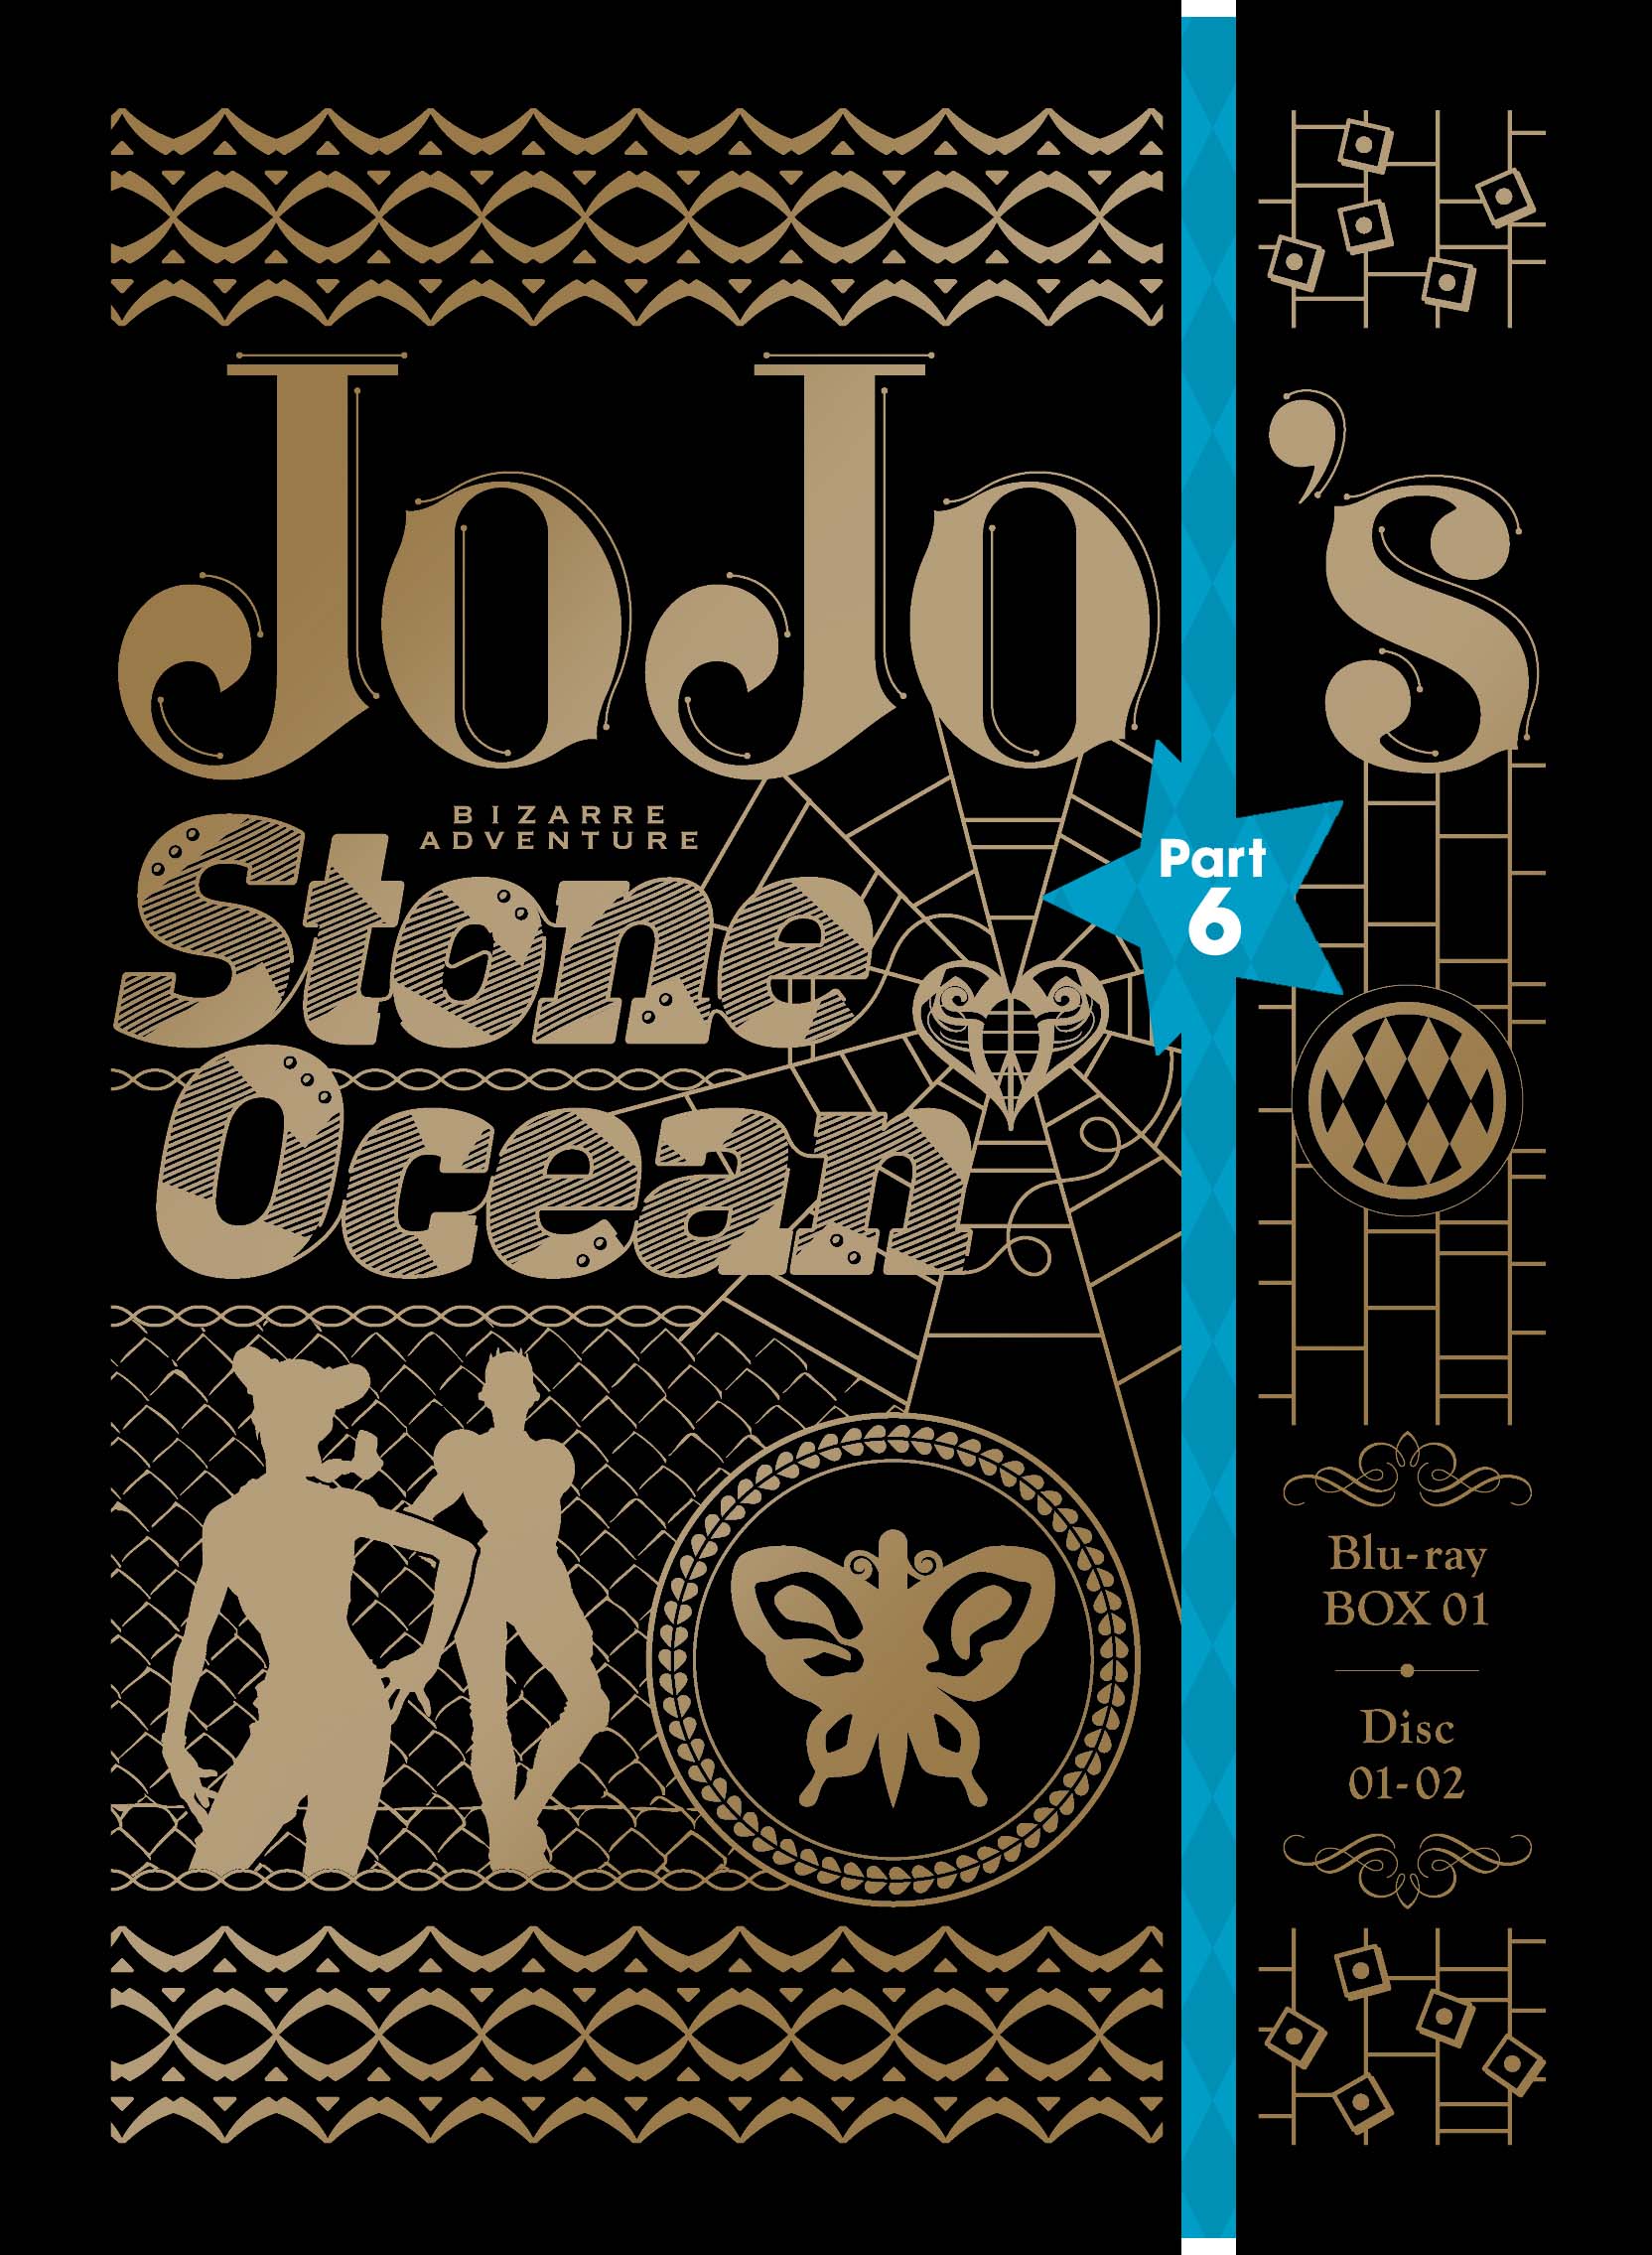 JoJo's Bizarre Adventure: Set 5 - Diamond is Unbreakable Part 2 Blu-ray  (Limited Edition)